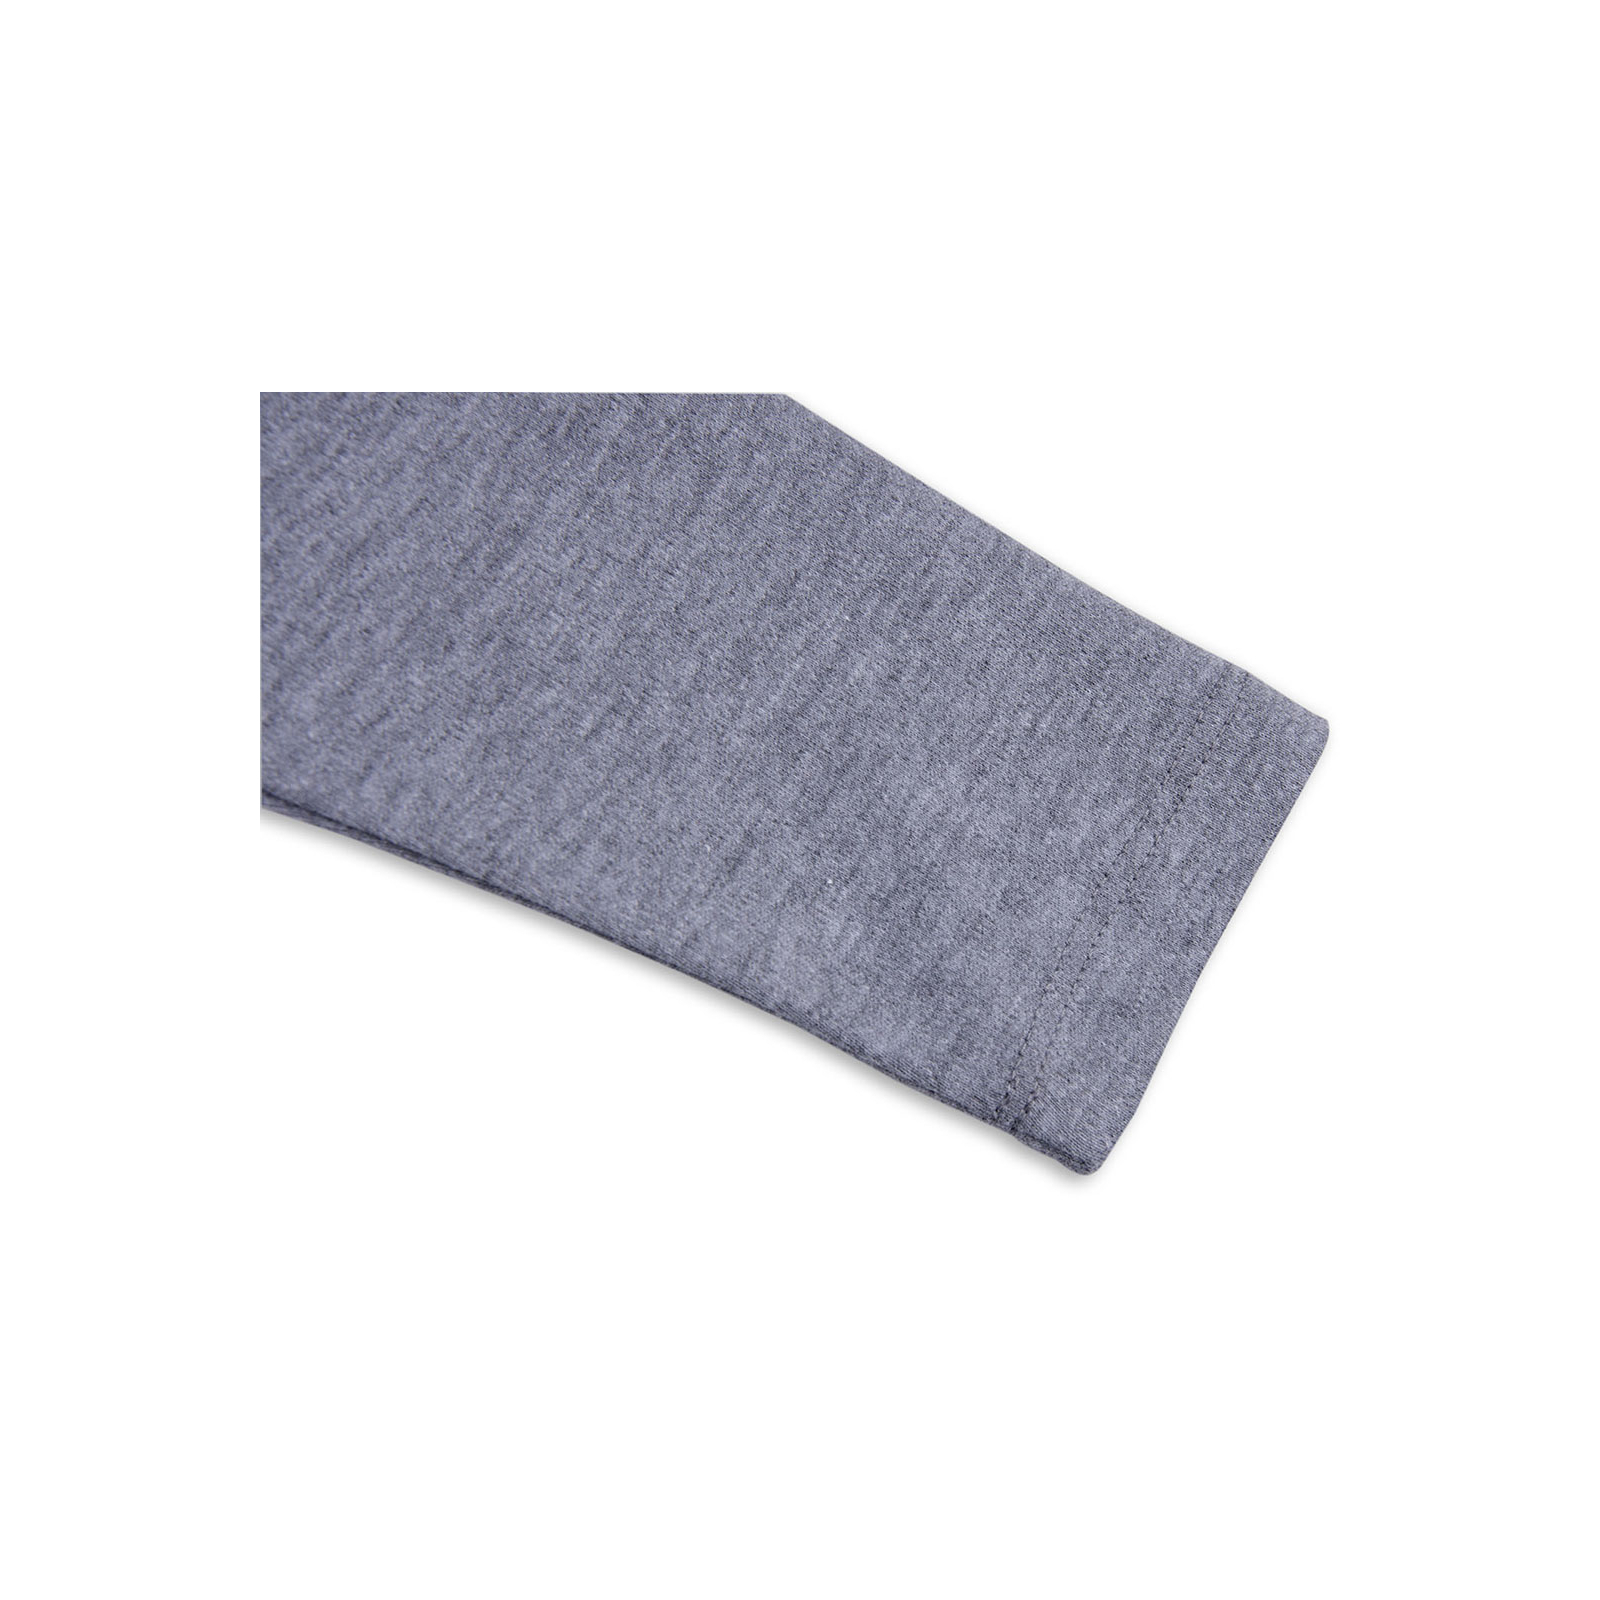 Кофта Lovetti водолазка серая меланжевая (1011-92-gray) изображение 4